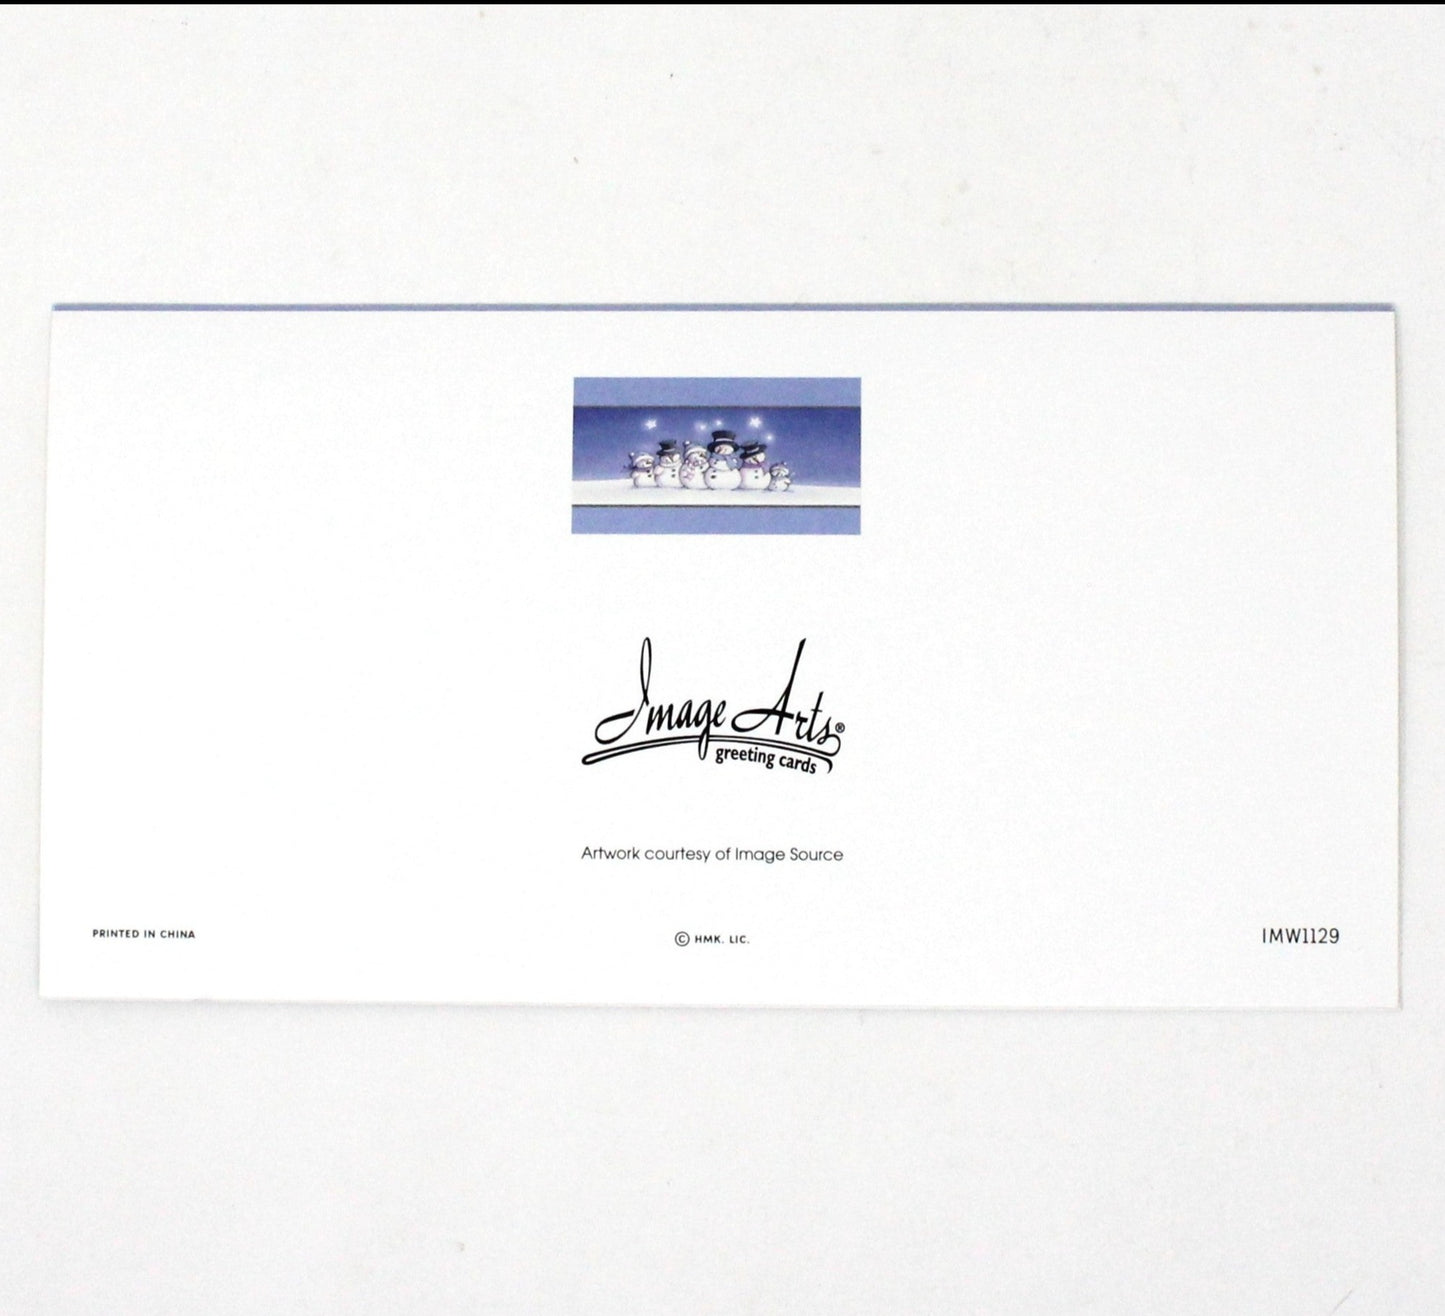 Greeting Card / Christmas, Snowmen Family, Blue & White, Set of 24 w/envelopes